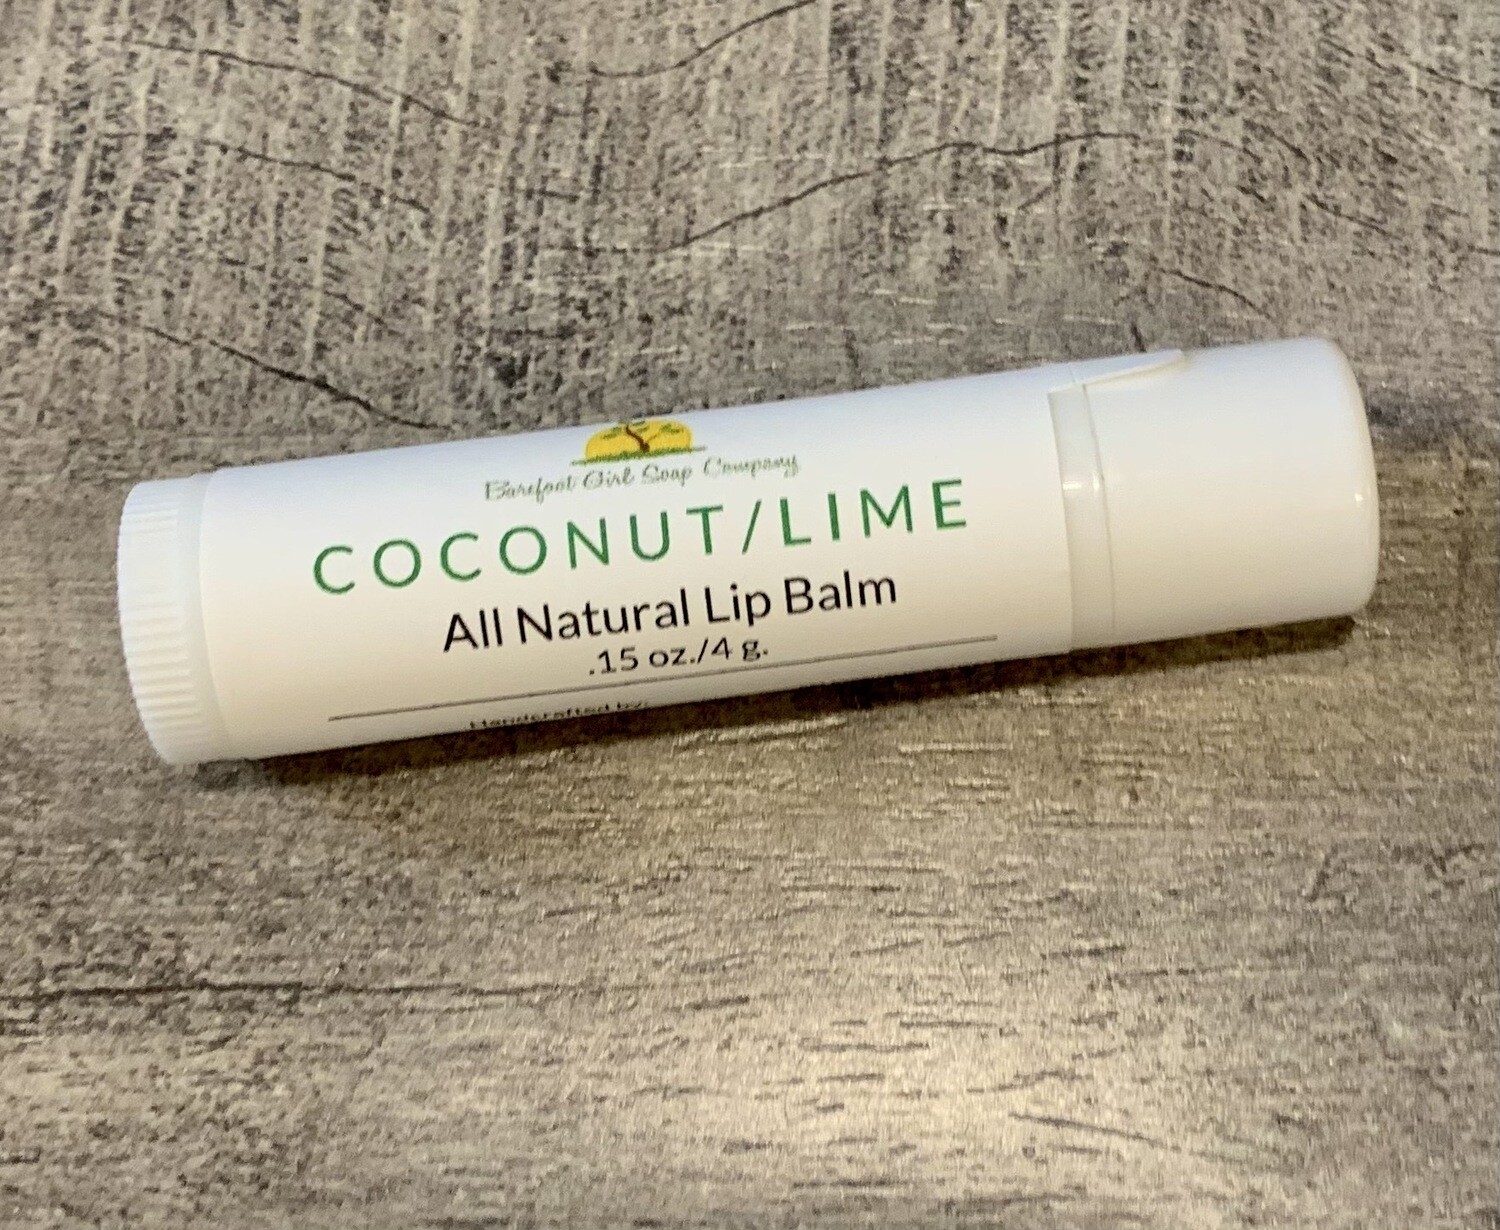 Coconut Lime Lip Balm